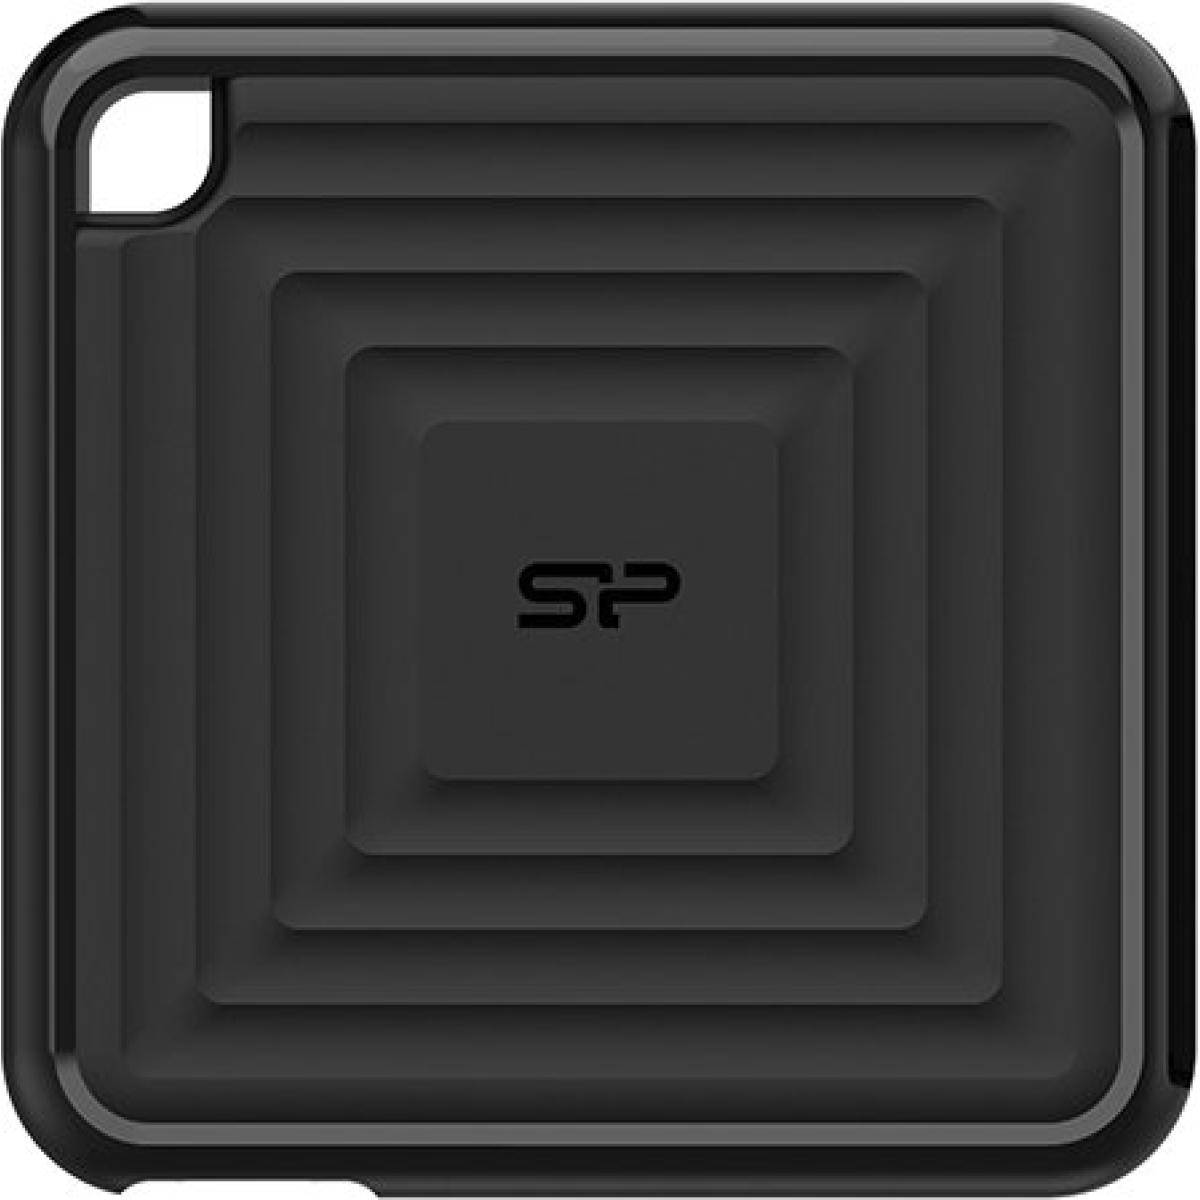 Silicon Power 960GB PC60 External SSD